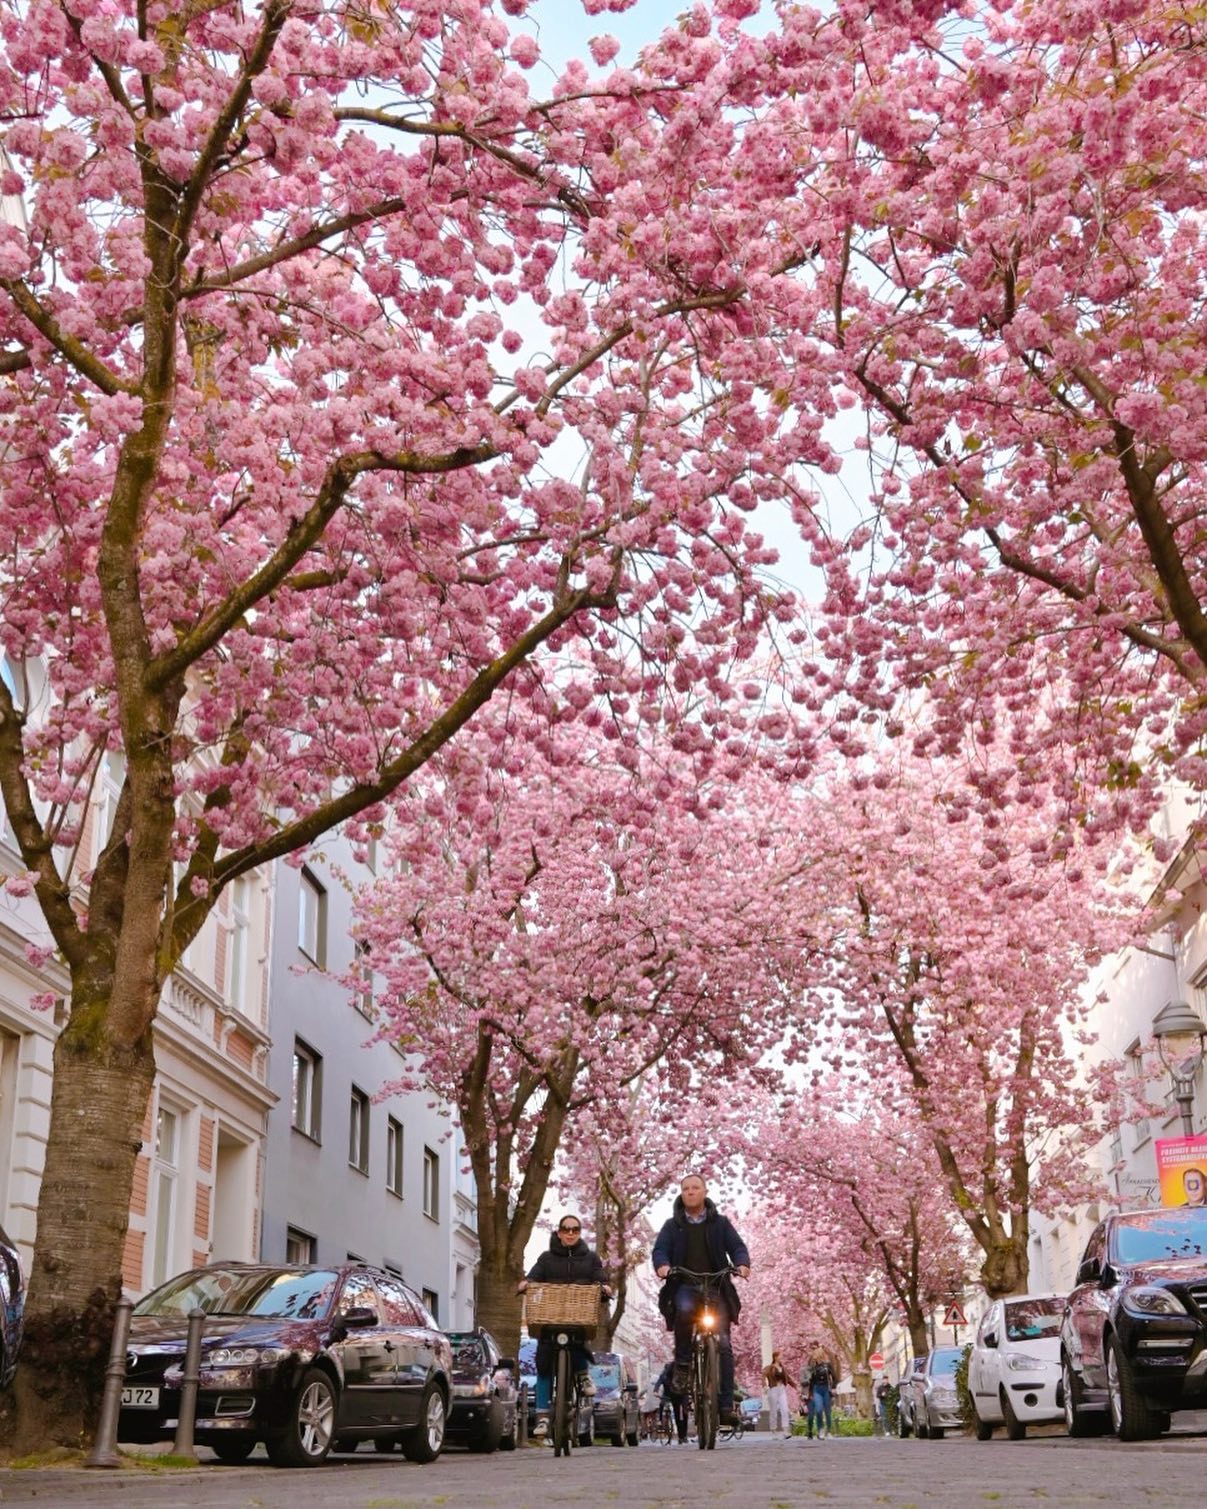 Cherry blossoms Bonn  #kirschblütebonn #cherryblossoms #bonn #igdaily #kibo22 #beethoven #pinkblossoms #altstadt #iglove #wdr #bestofbonn #kirschblütebonn #bonnstagram #kirschblütenliveticker #bonnkirschblüten #cherryblossomsbonn